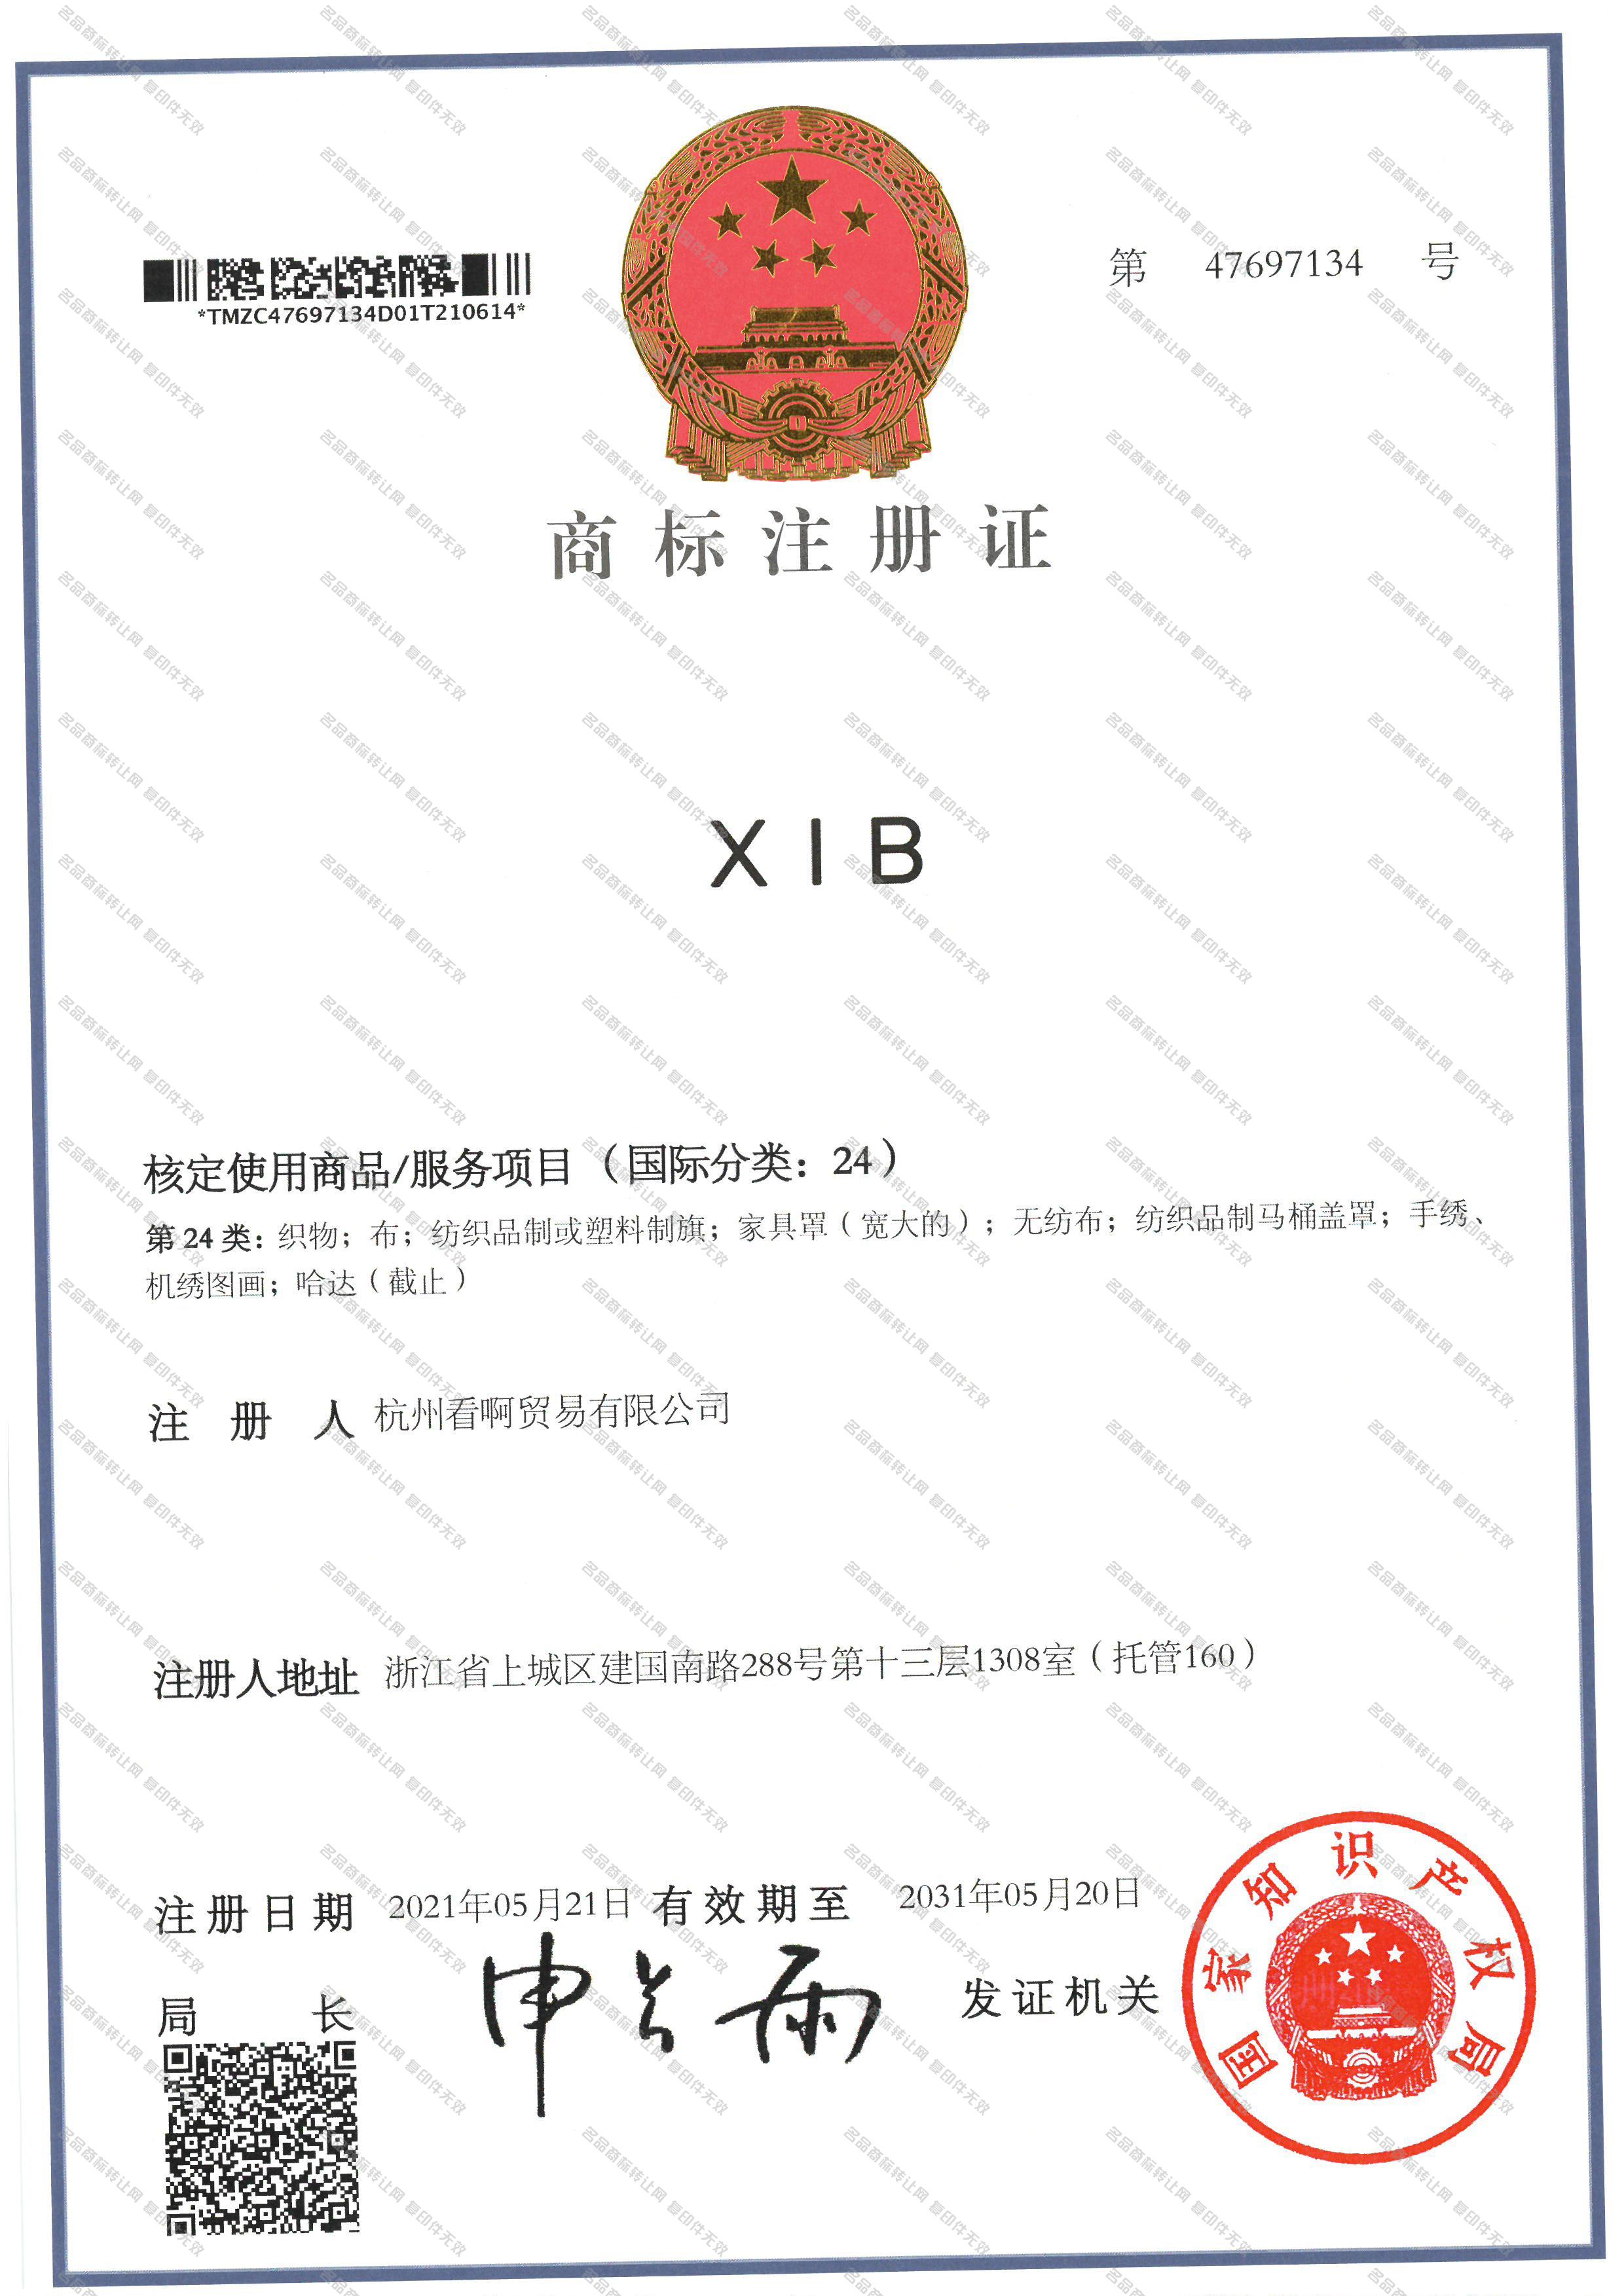 XIB注册证